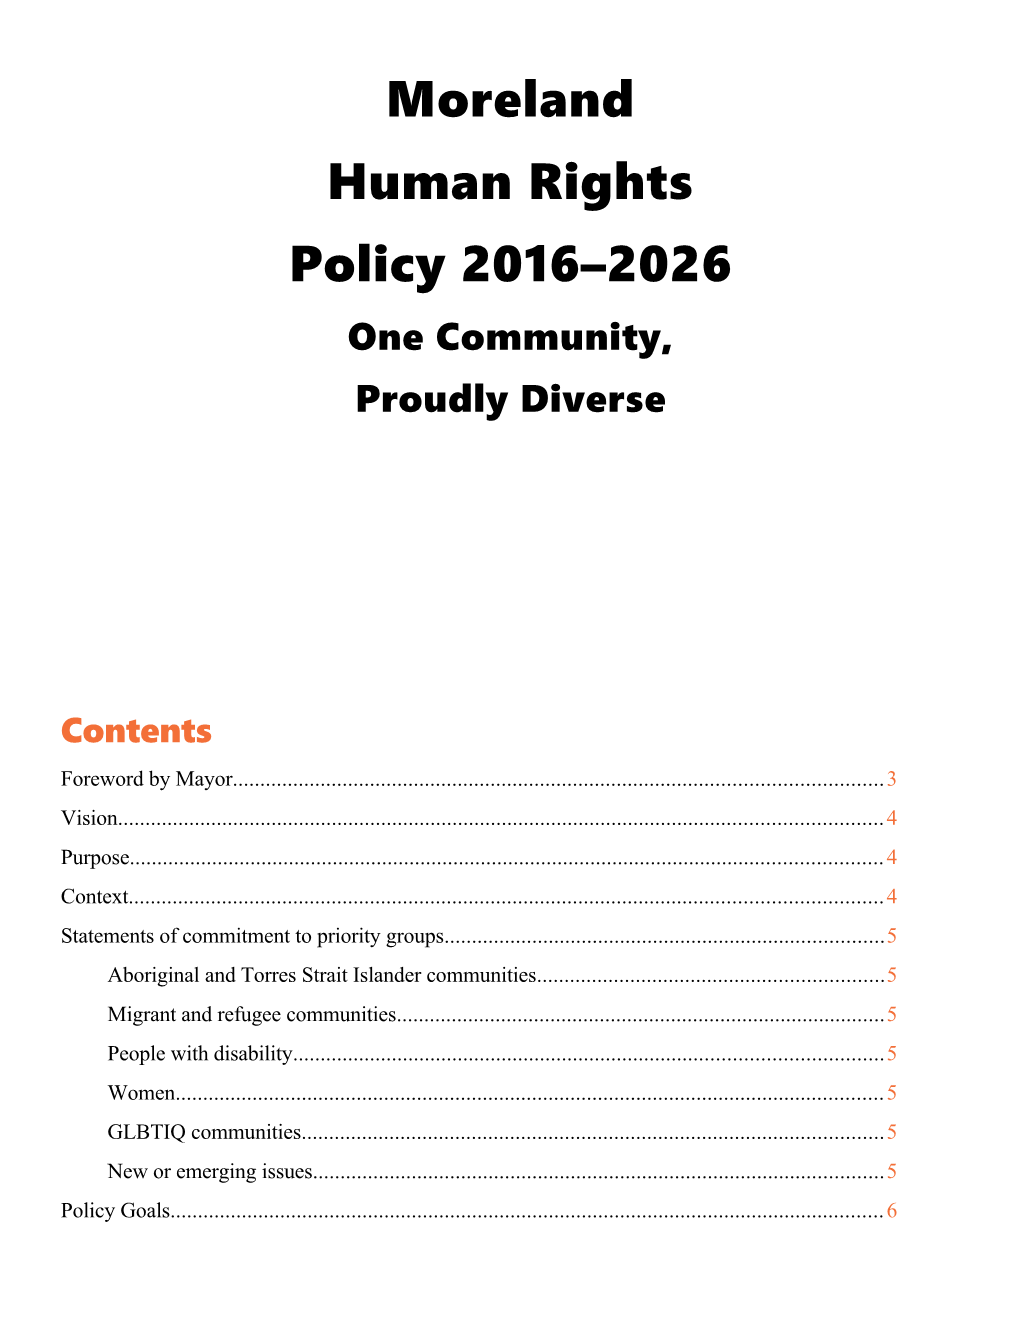 Moreland Human Rights Policy 2016 2026